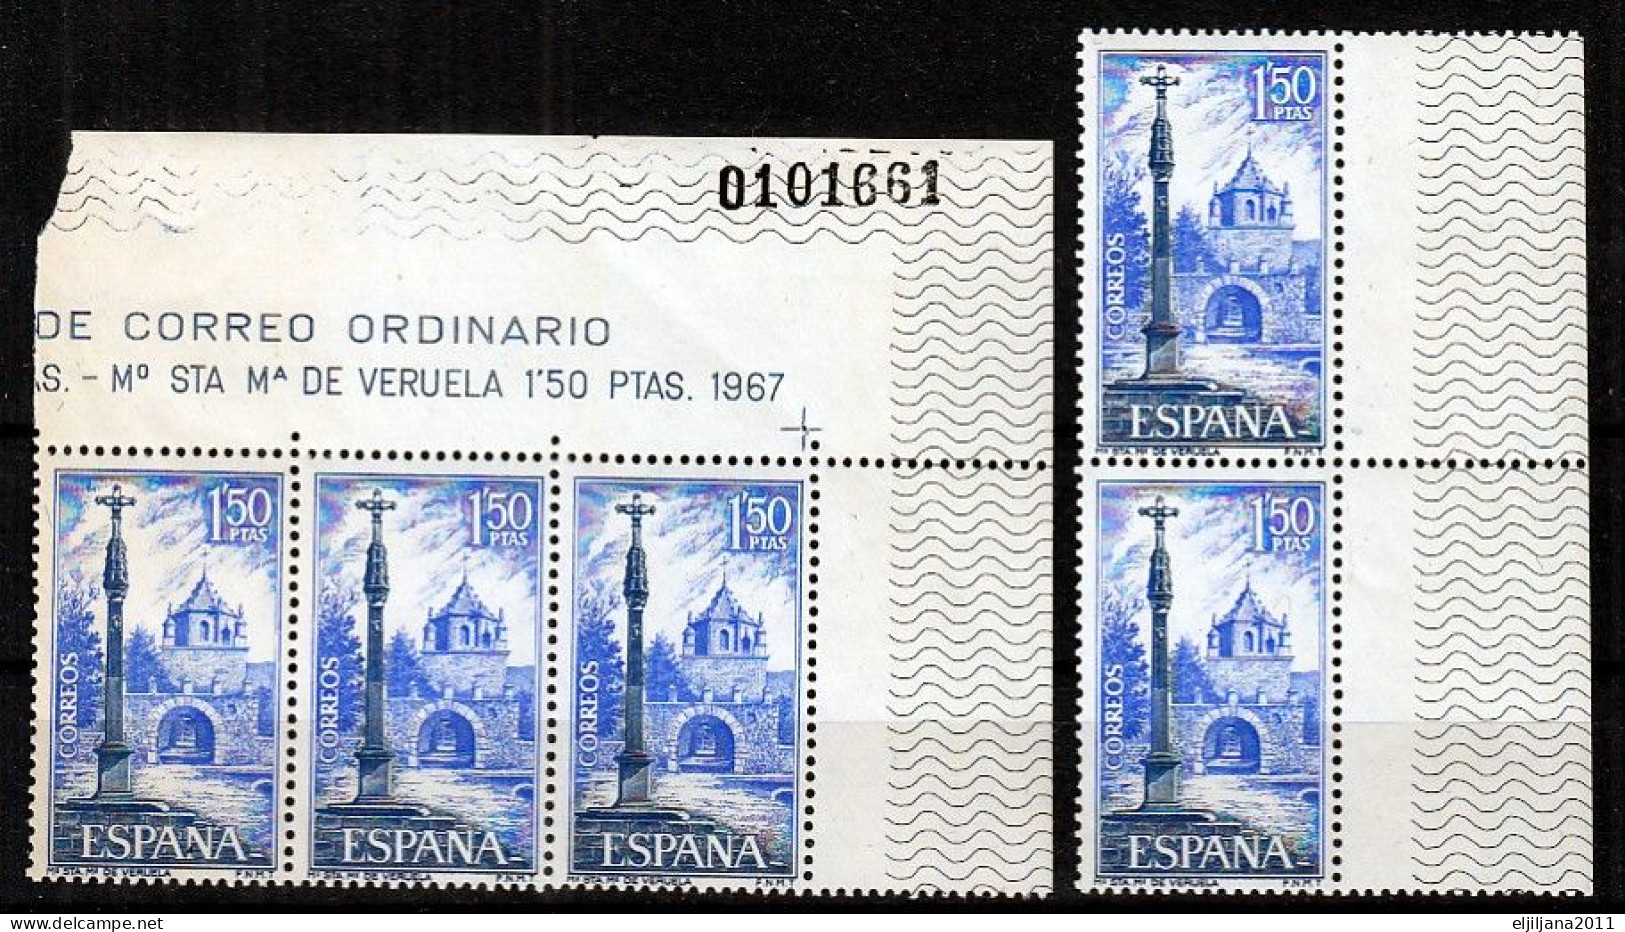 ⁕ SPAIN / ESPANA 1967 ⁕ Monasteries And Abbeys Mi.1728 - 1730 X 5 ⁕ MNH - See Scan - Nuovi